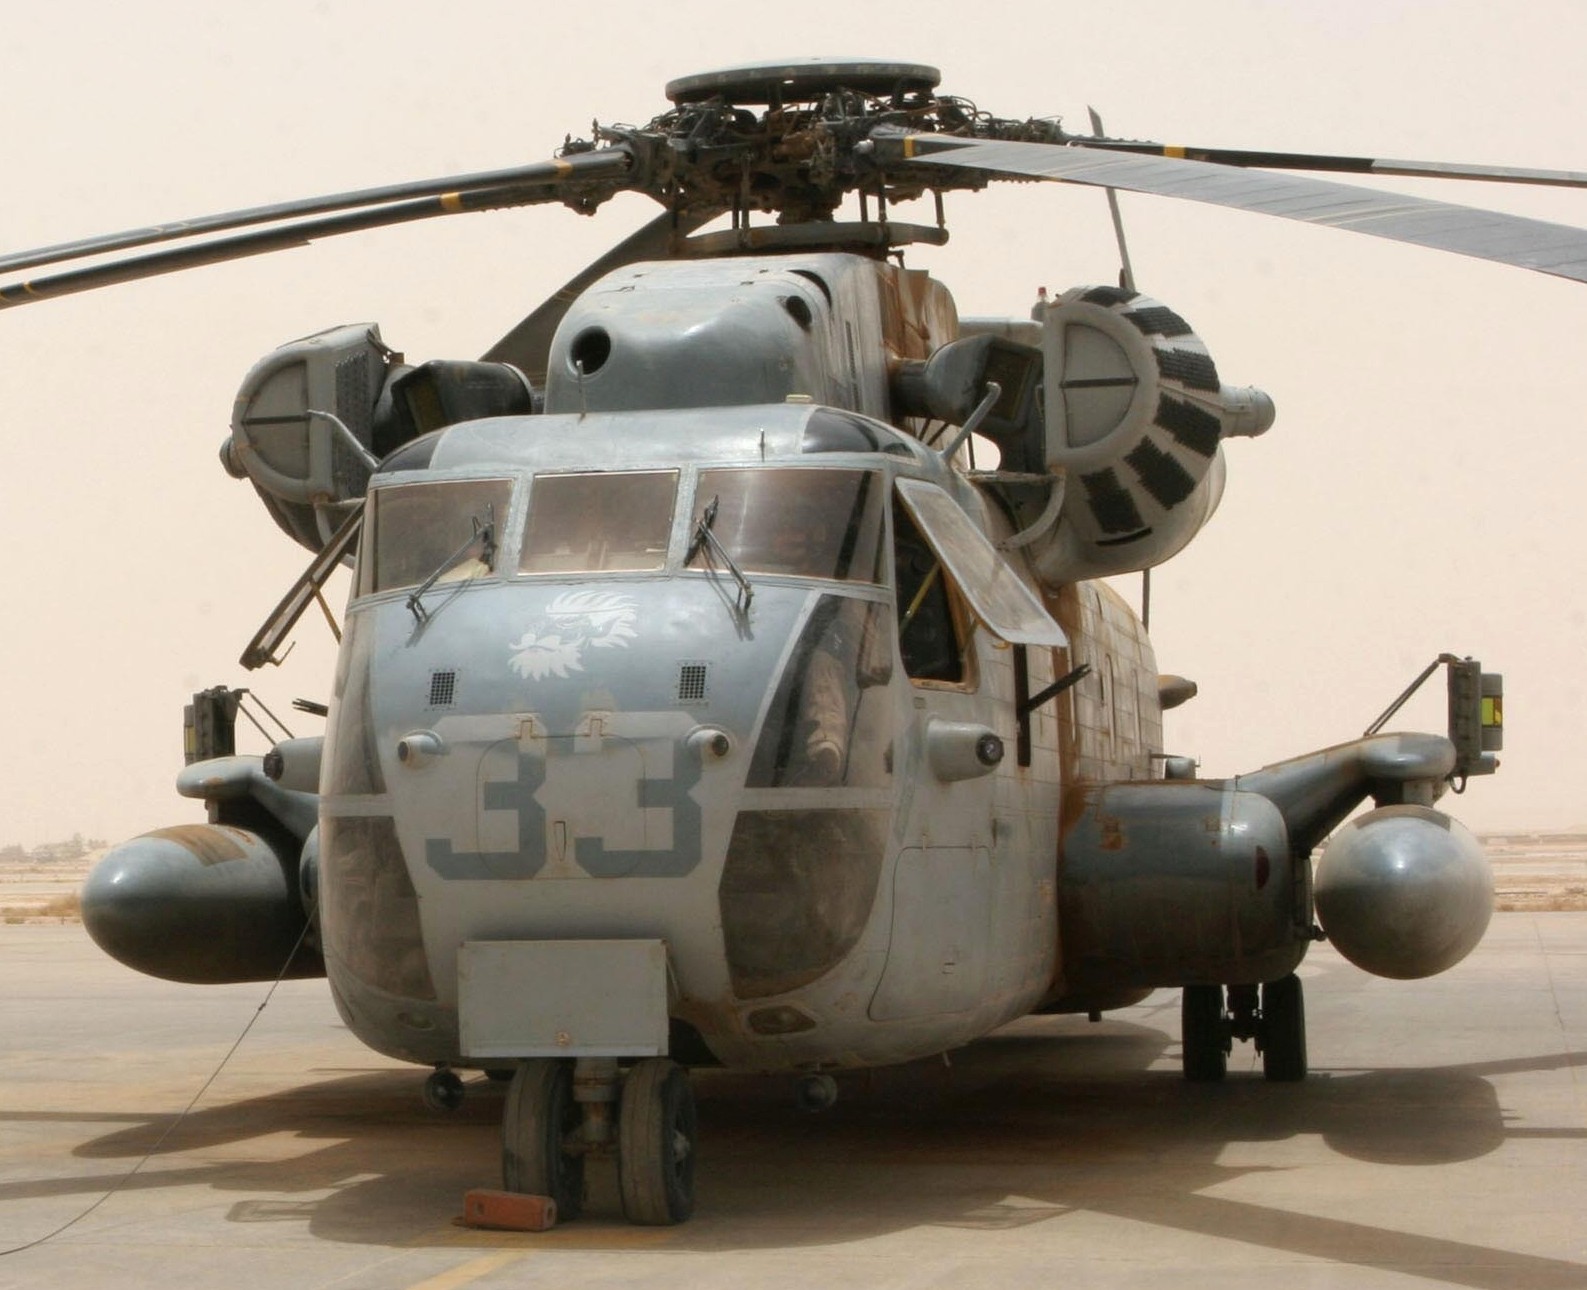 hmh-362 ugly angels marine heavy helicopter squadron usmc sikorsky ch-53d sea stallion 25 al asad air base iraq